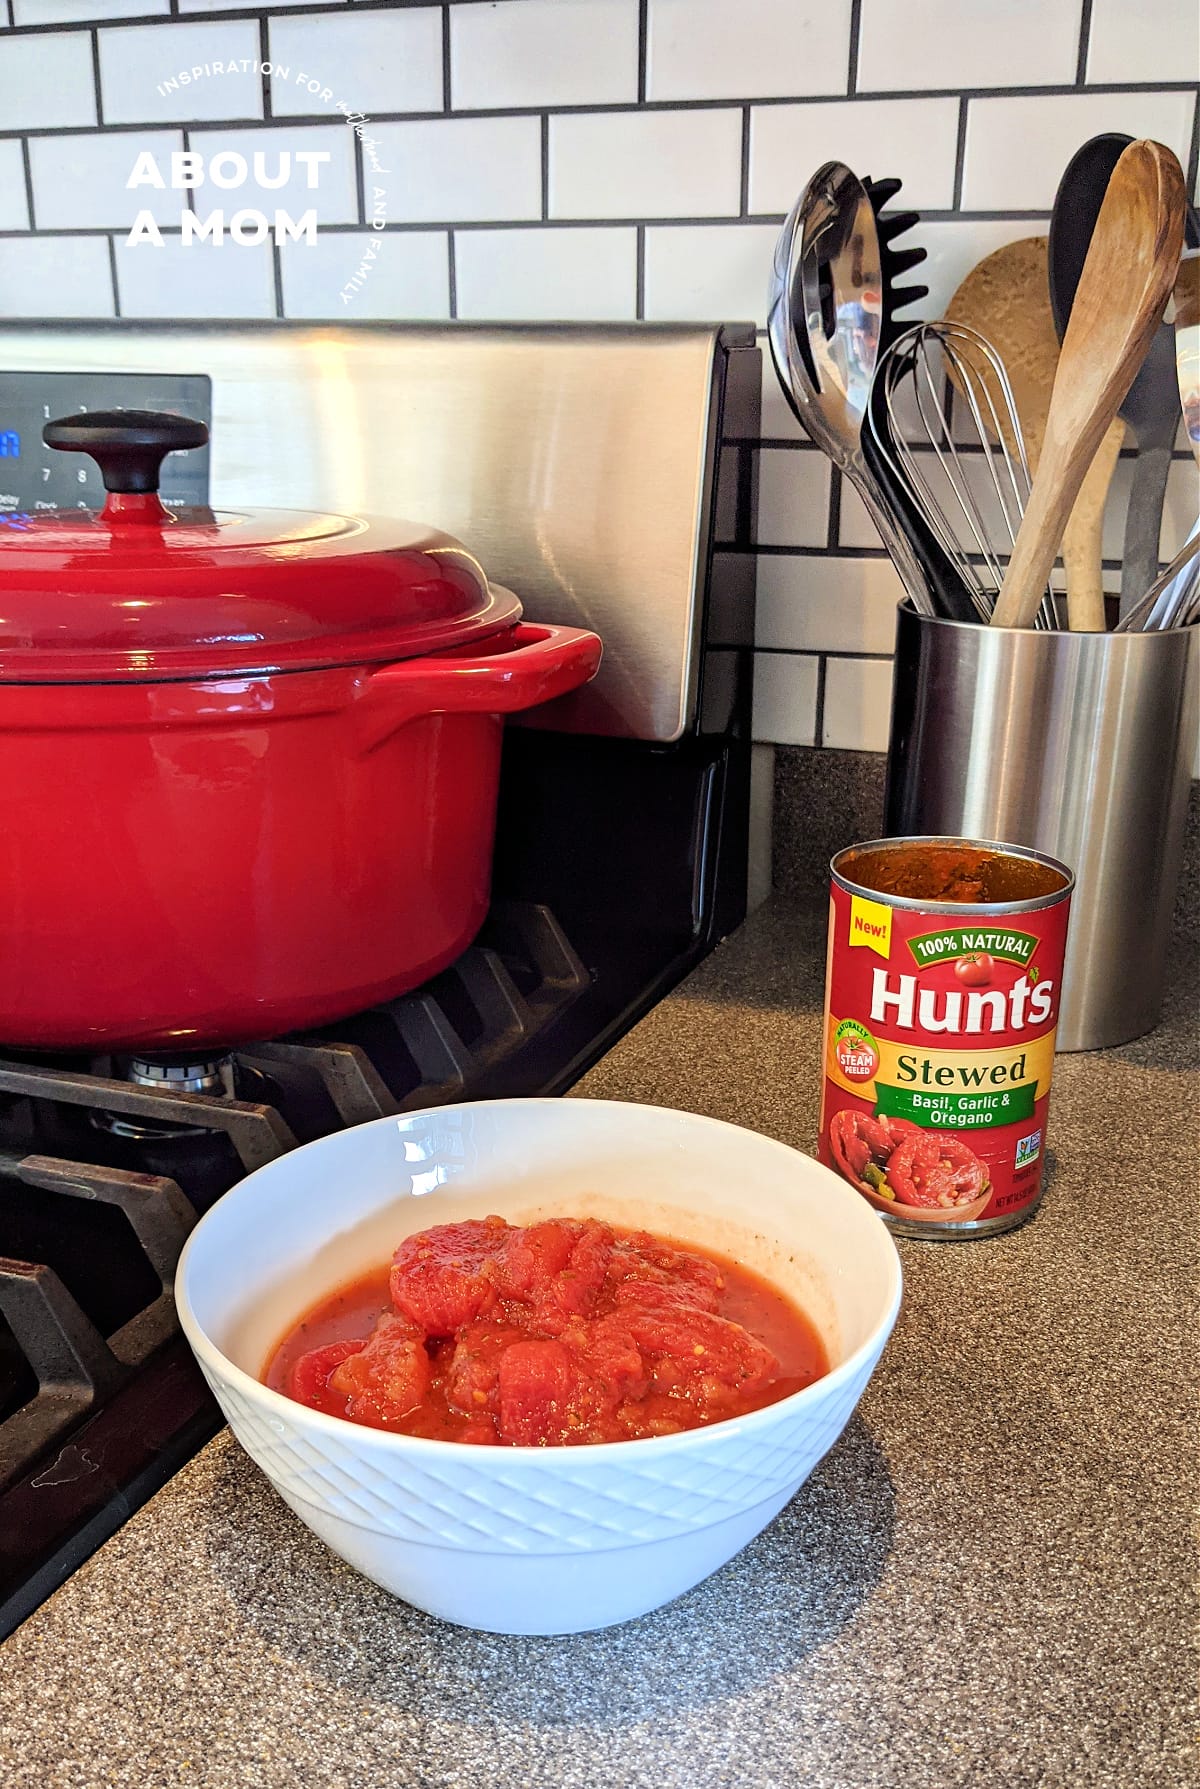 Hunt's Basil, Garlic and Oregano Stewed Tomatoes